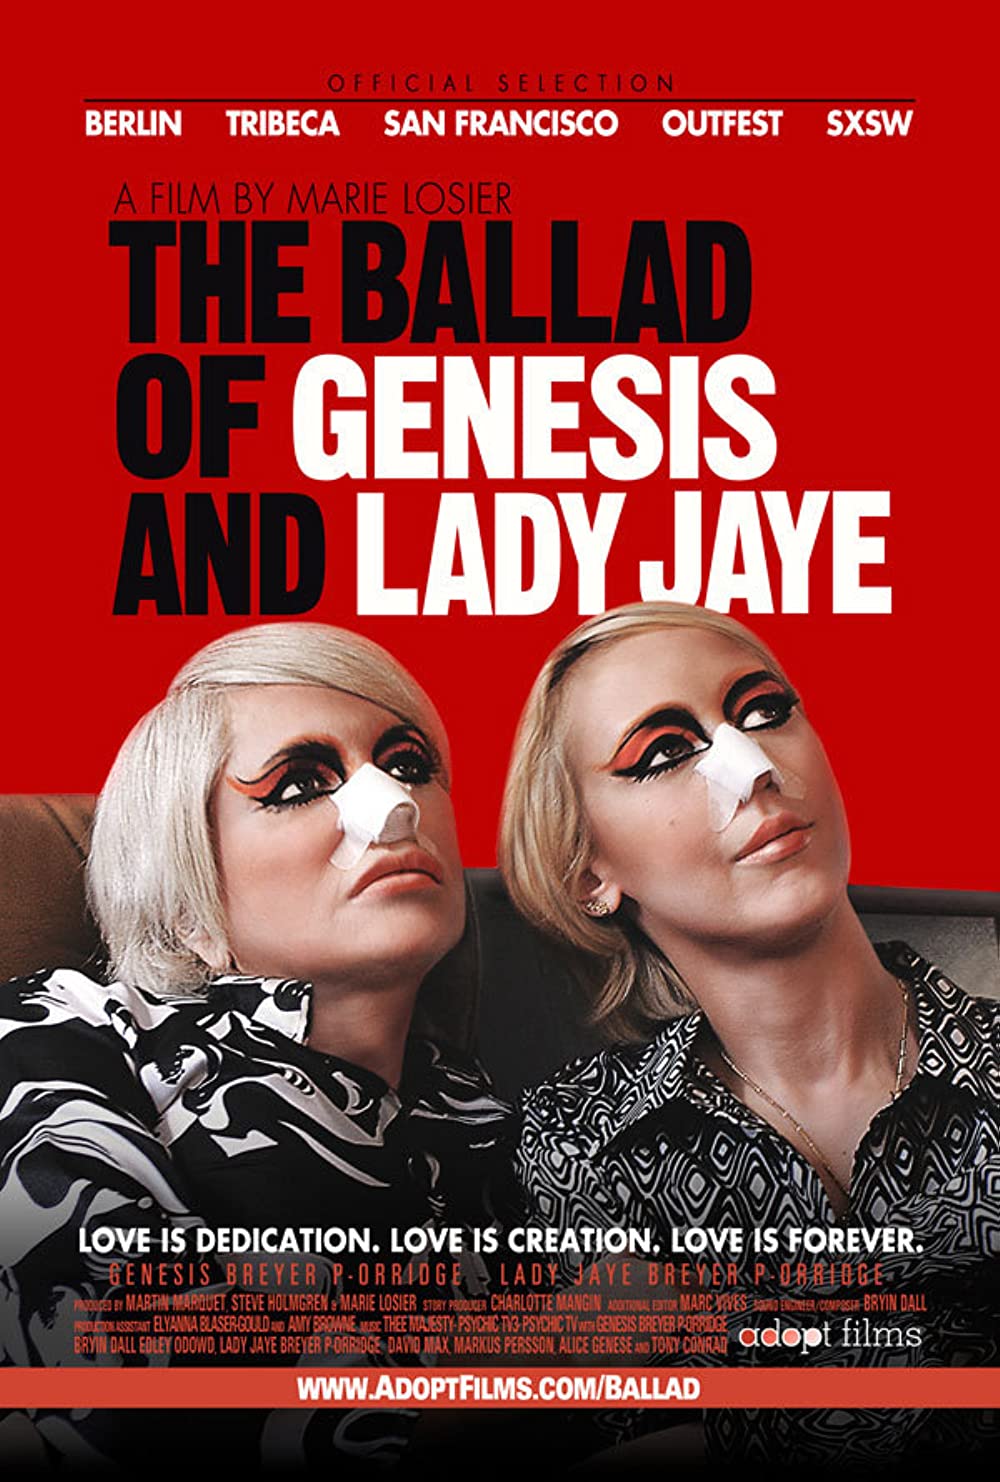 Filmbeschreibung zu The Ballad of Genesis and Lady Jaye (OV)